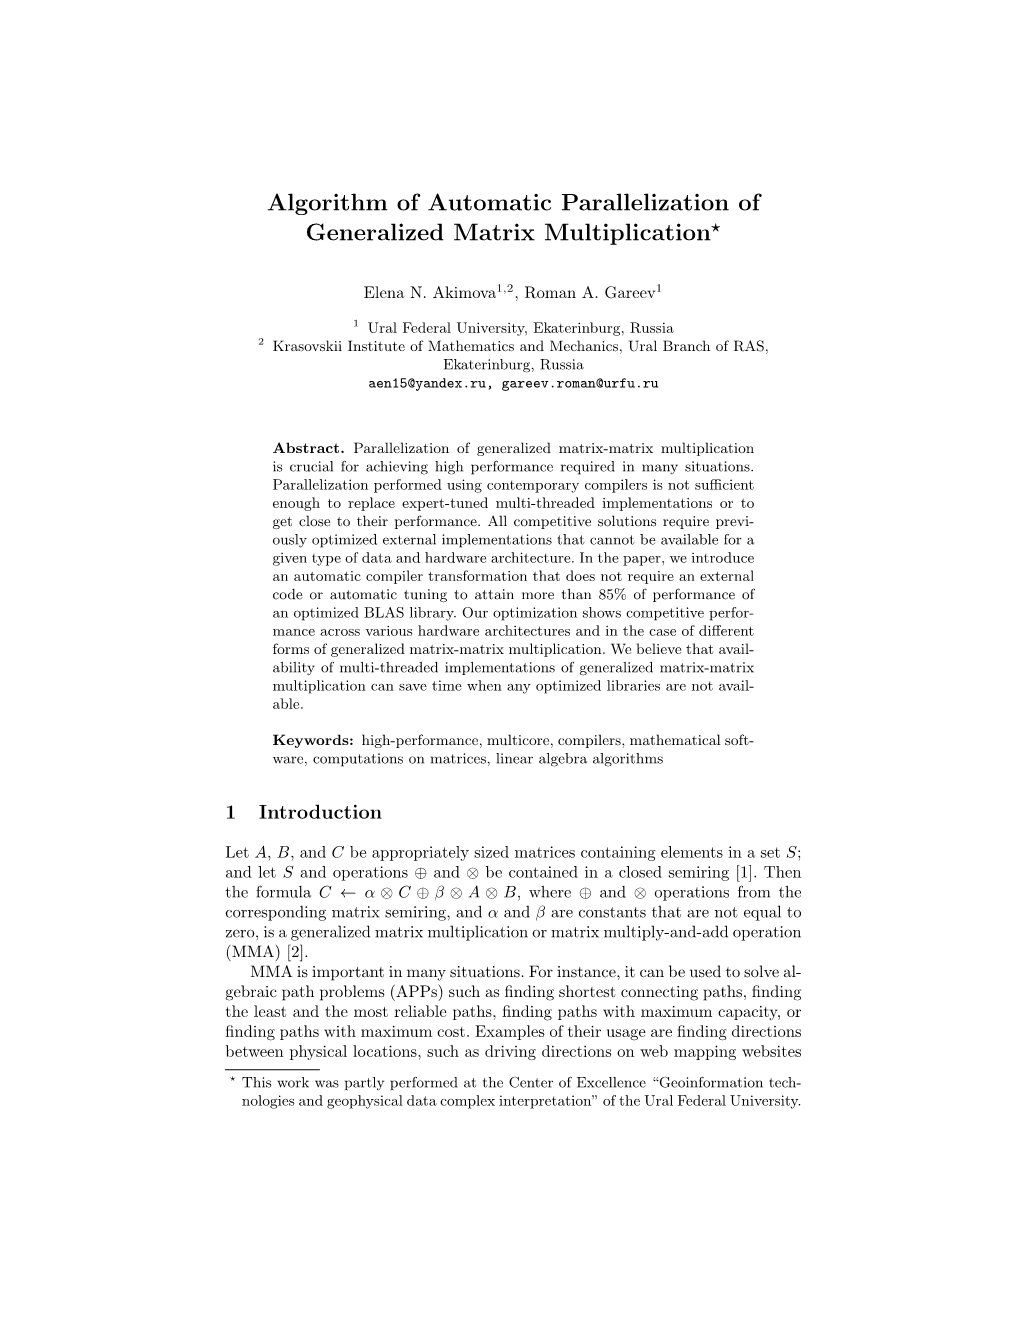 Algorithm of Automatic Parallelization of Generalized Matrix Multiplication?